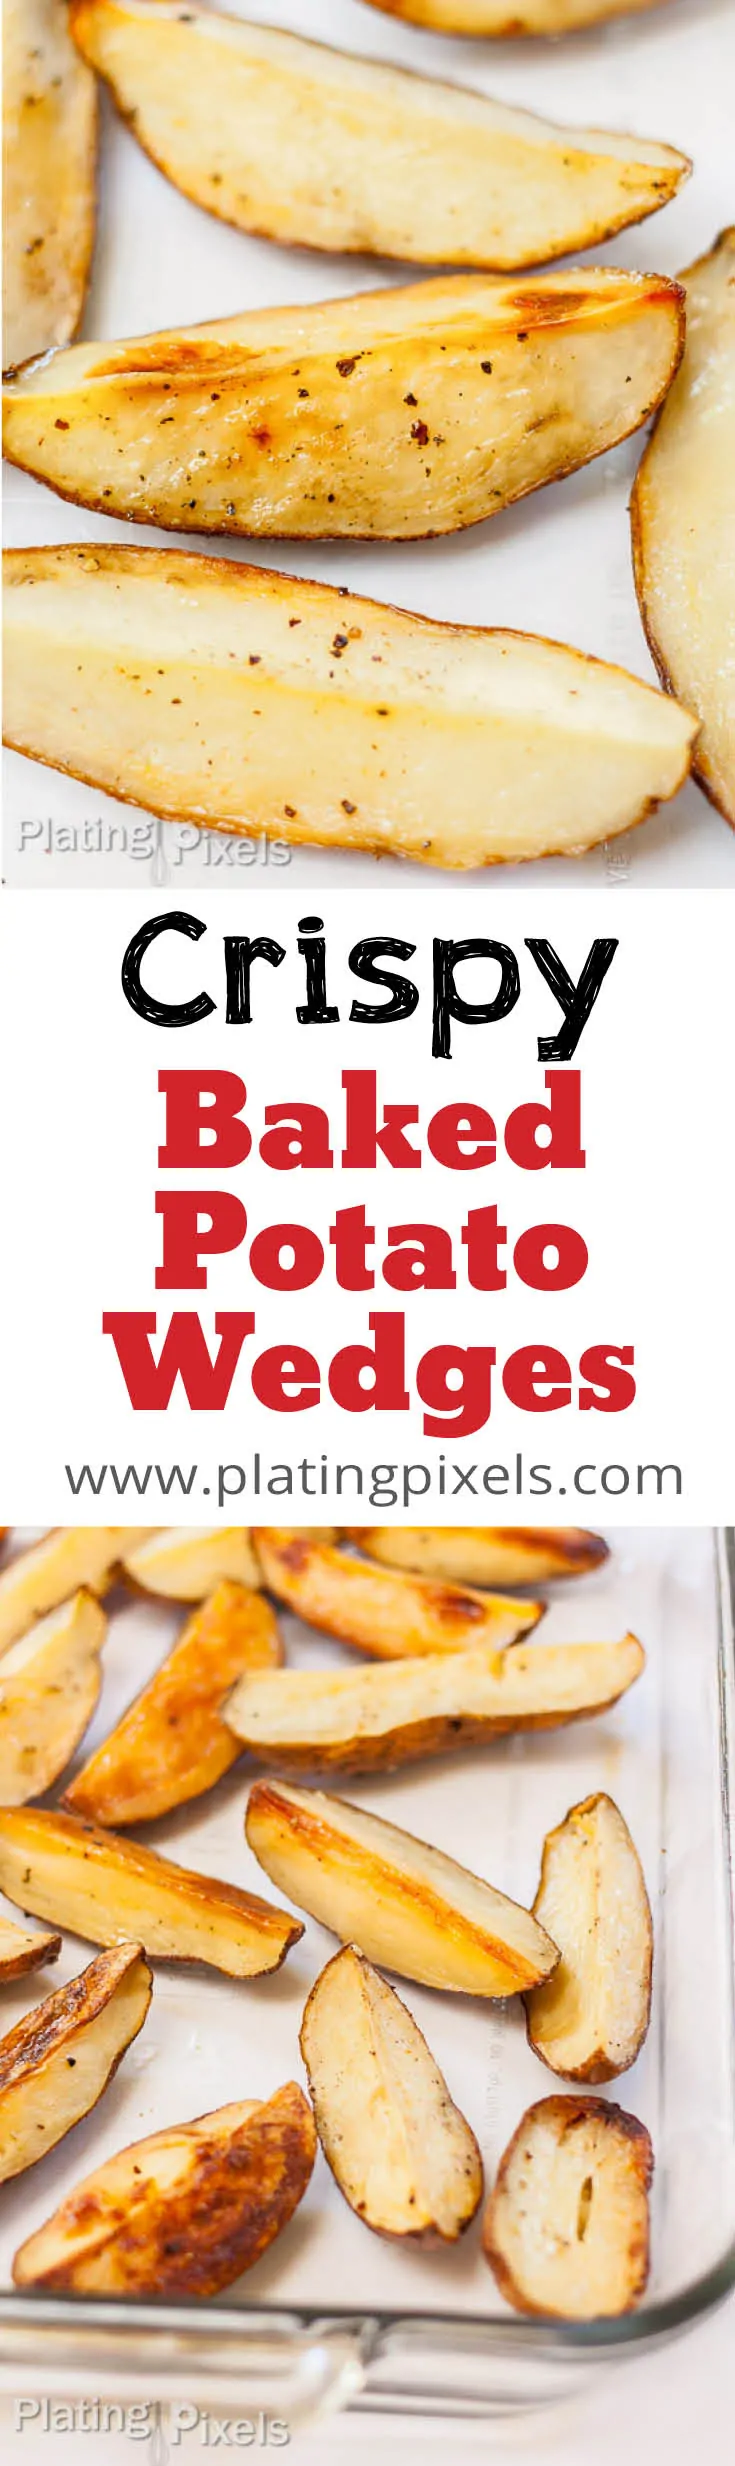 How to Bake Potato Wedges - Crispy Roasted Potato Wedges - www.platingpixels.com